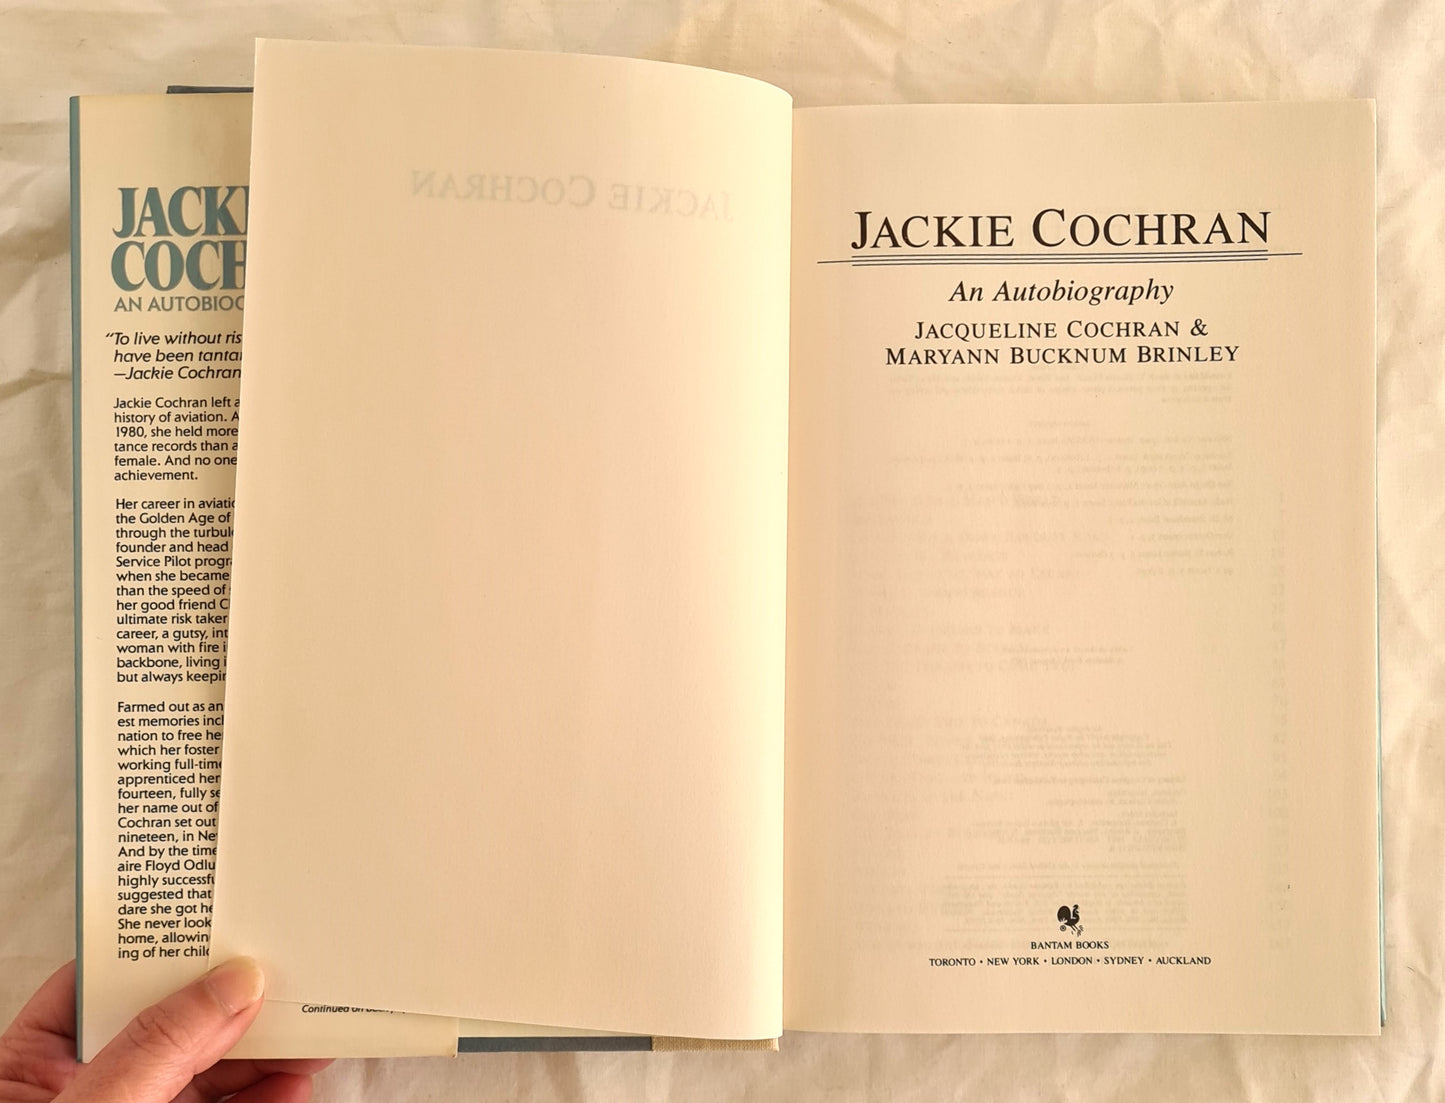 Jackie Cochran by Jacqueline Cochran and Maryann Bucknum Brinley